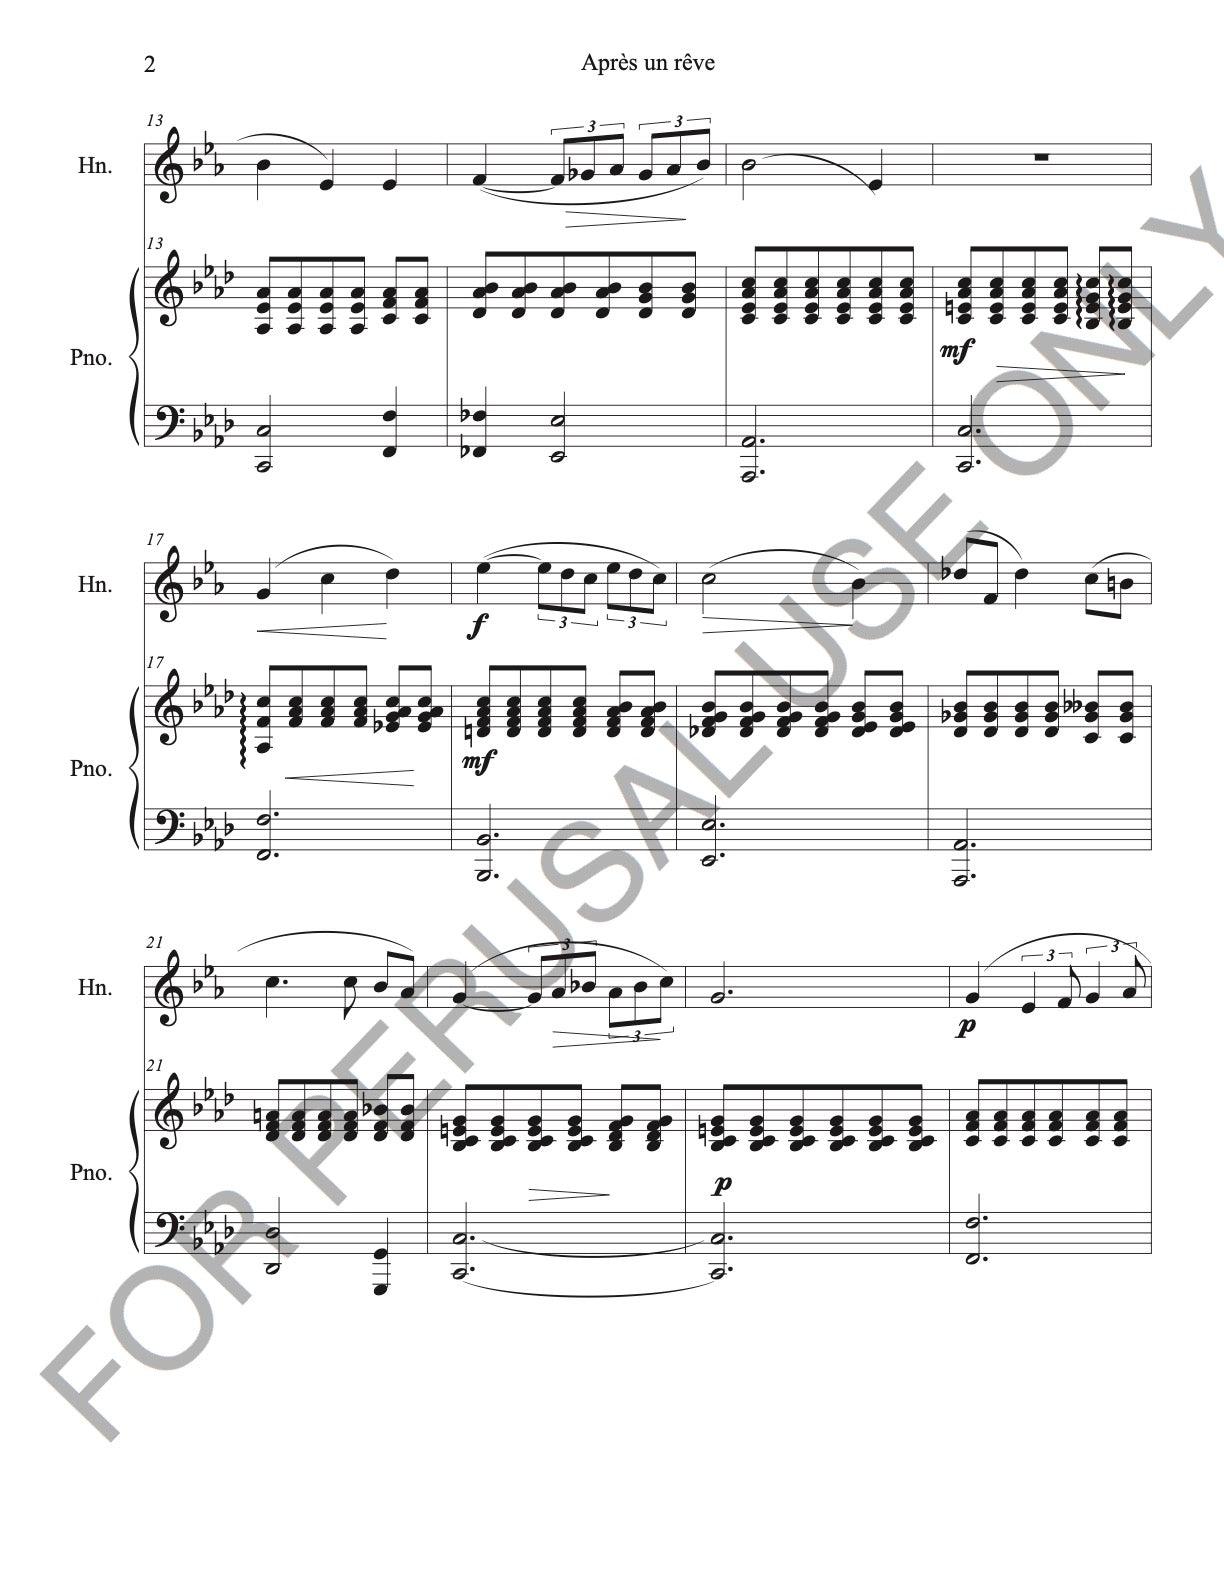 F. Horn and Piano Sheet Music: Après un rêve by Faure (score+parts+mp3) - ChaipruckMekara